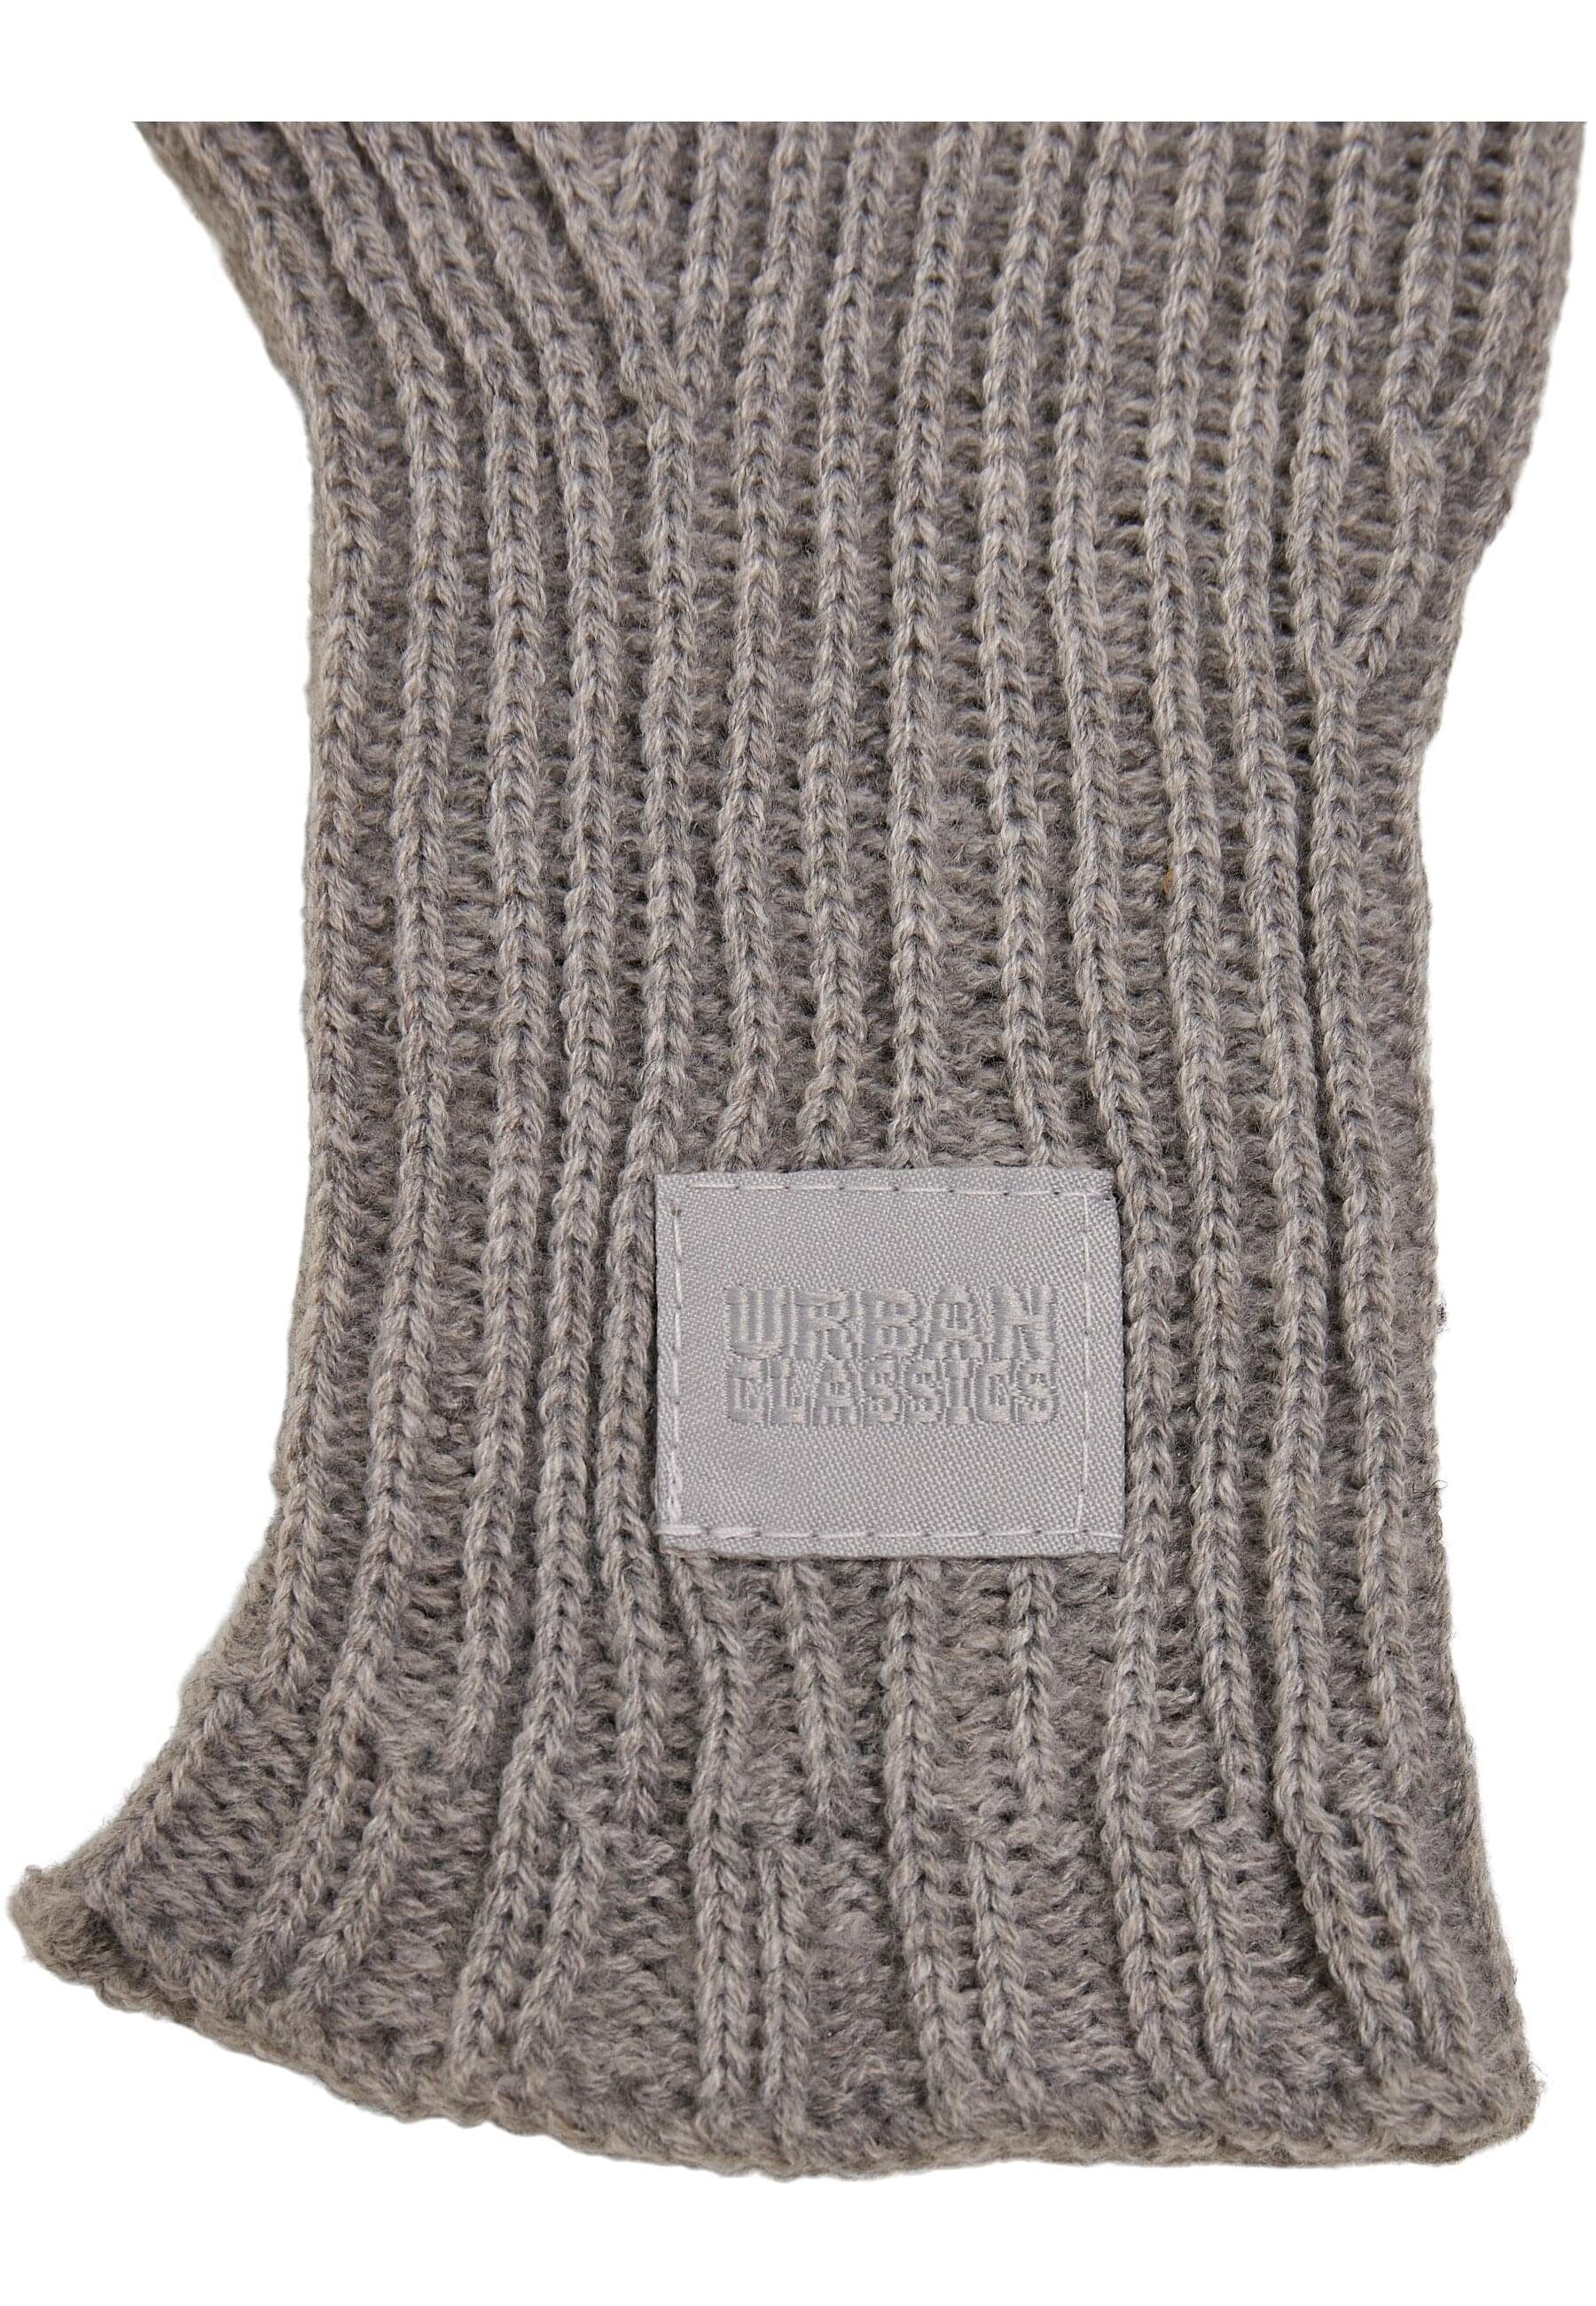 Mix Unisex Knitted URBAN Wool Gloves CLASSICS Smart Baumwollhandschuhe heathergrey